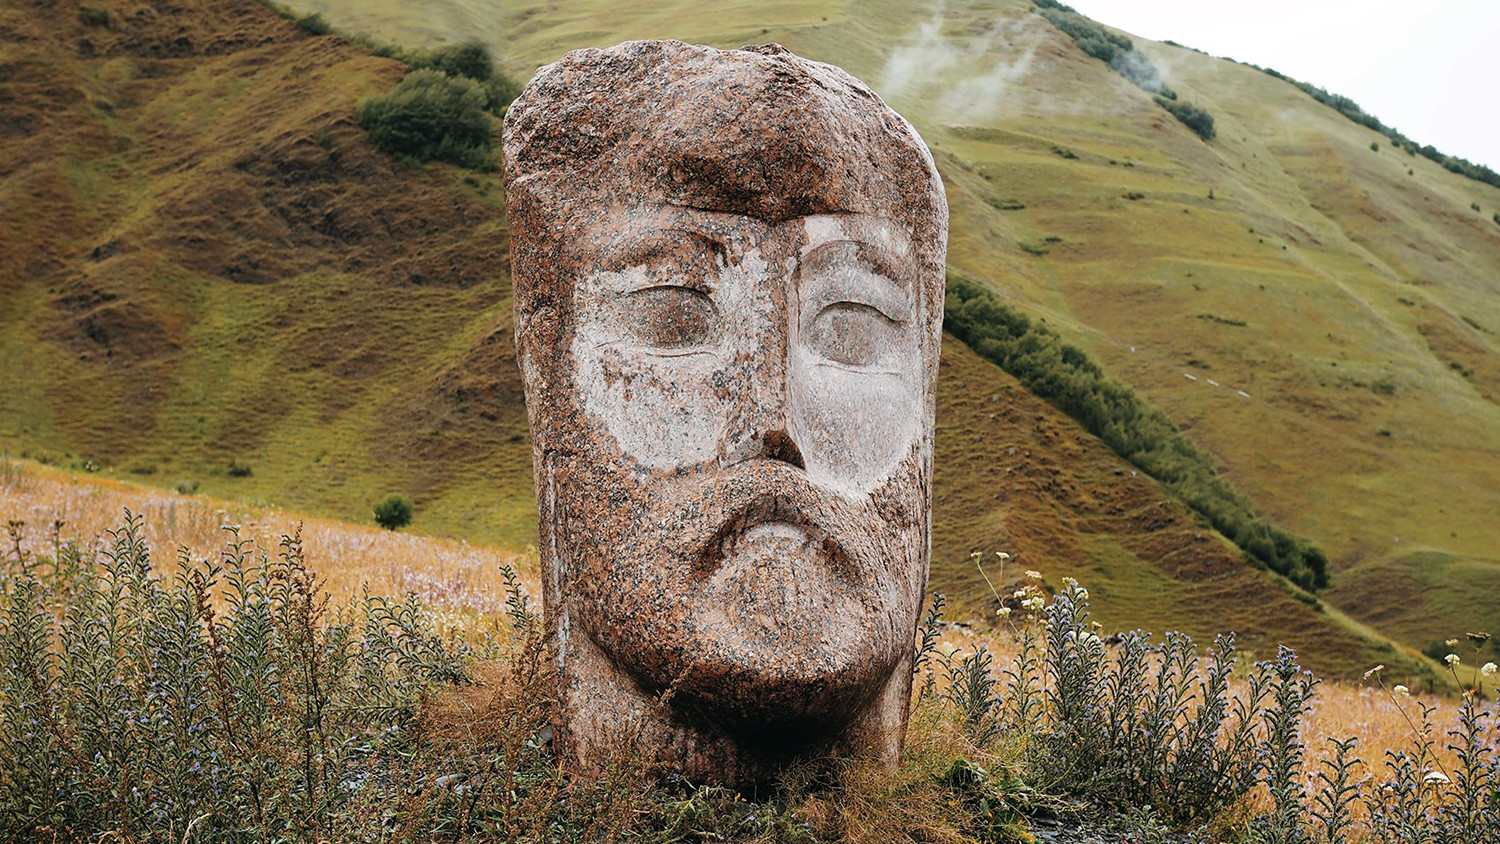 Sno Canyon. Monolith sculpture by Merab Piranishvili